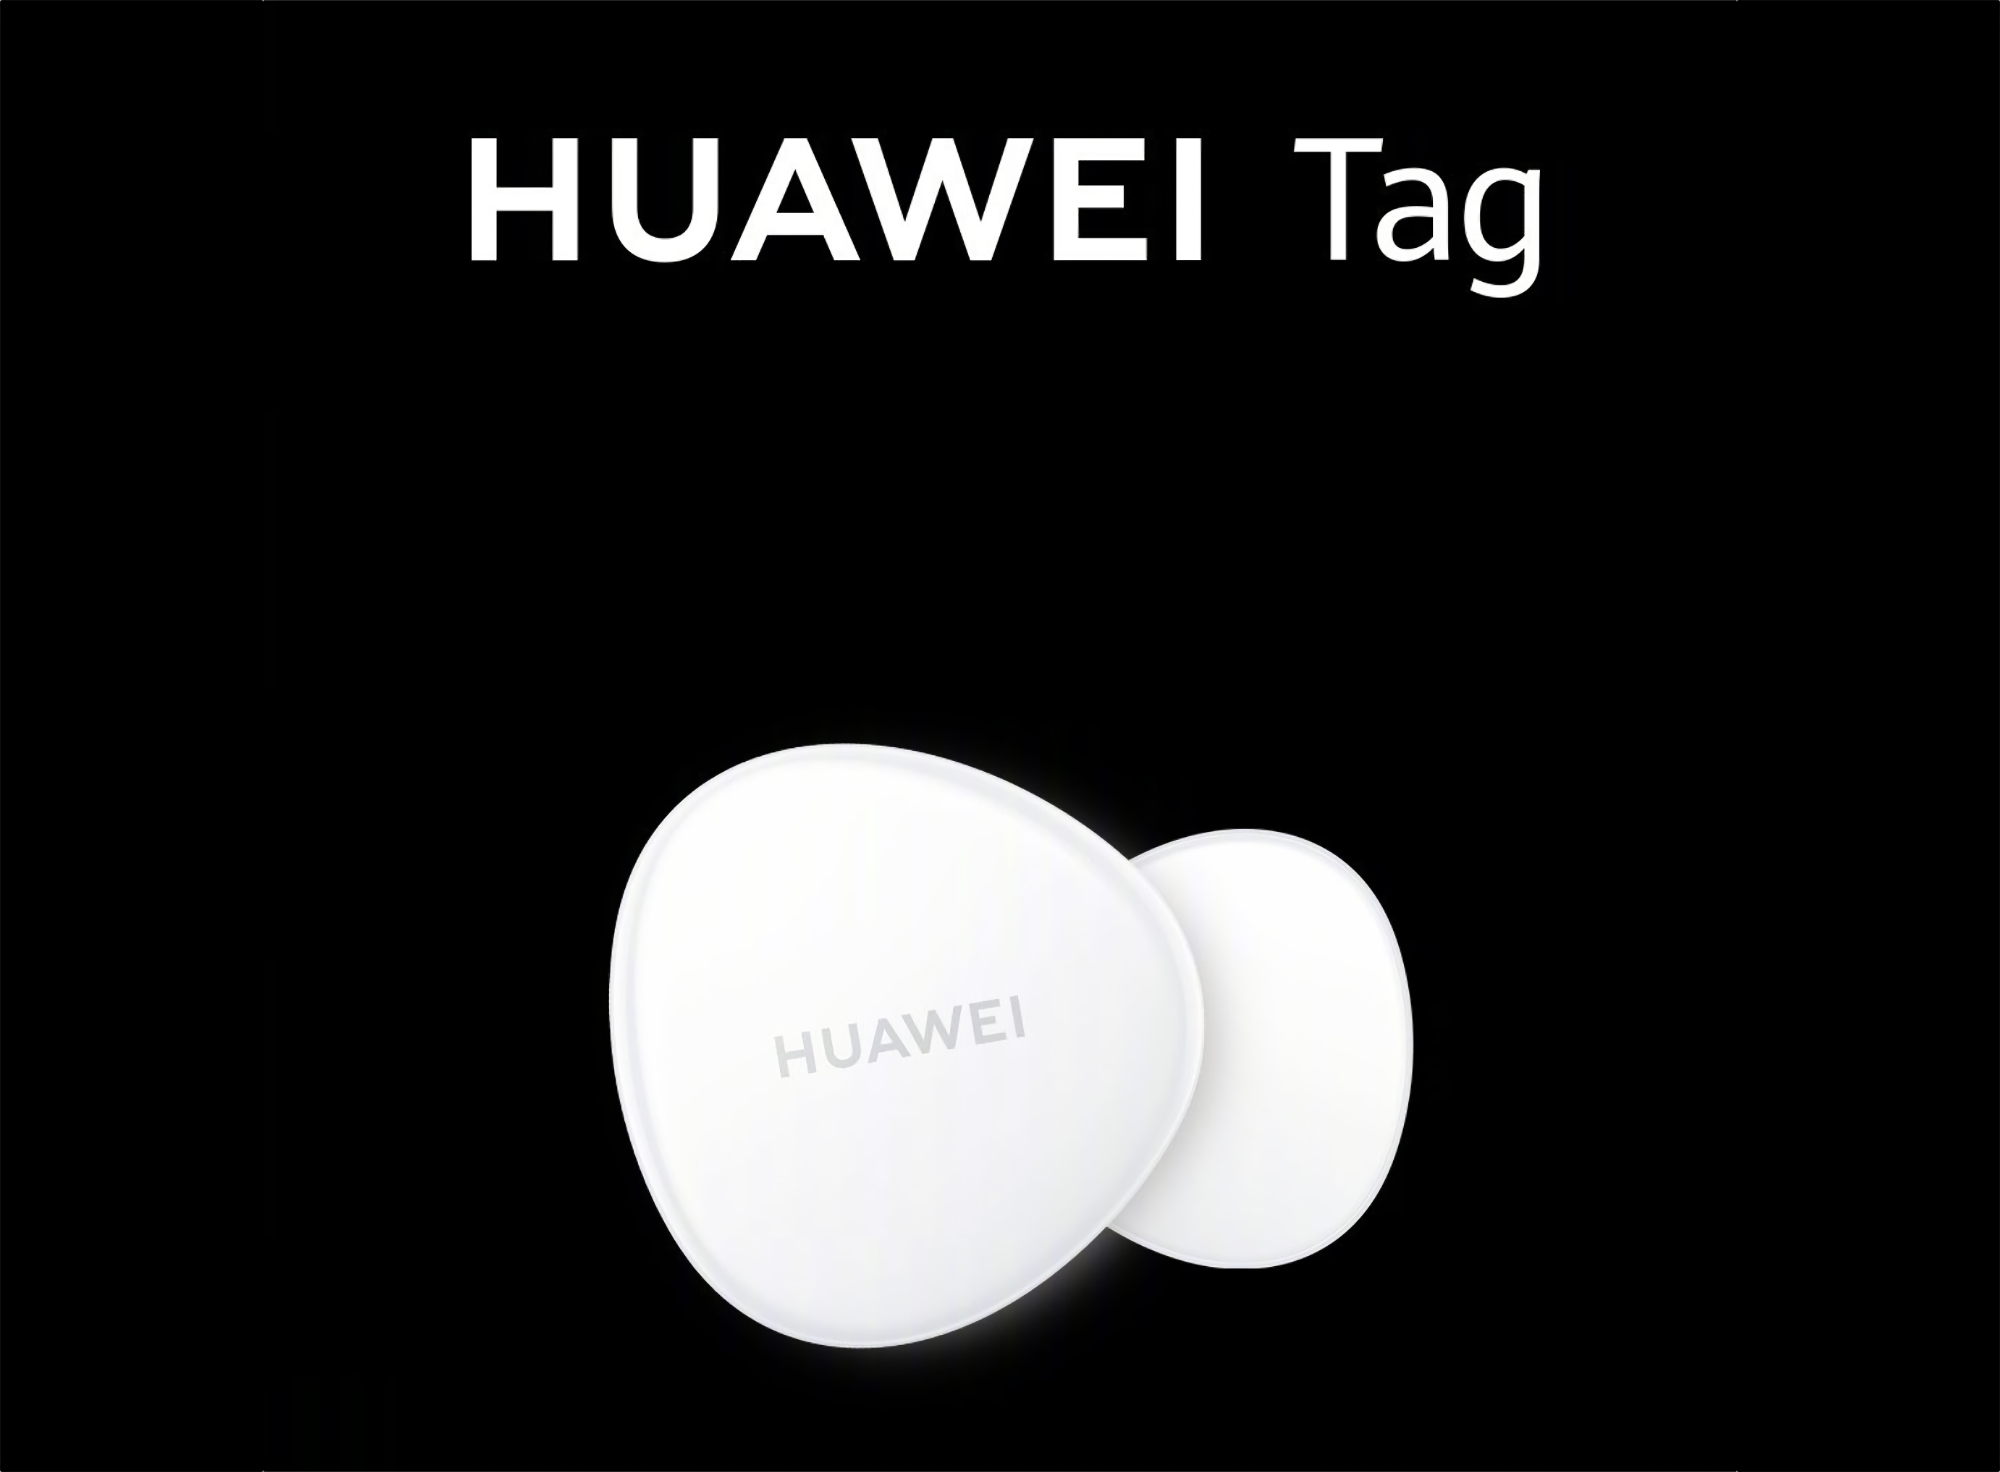 https://gagadget.com/media/post_big/Huawei_Tag.jpg